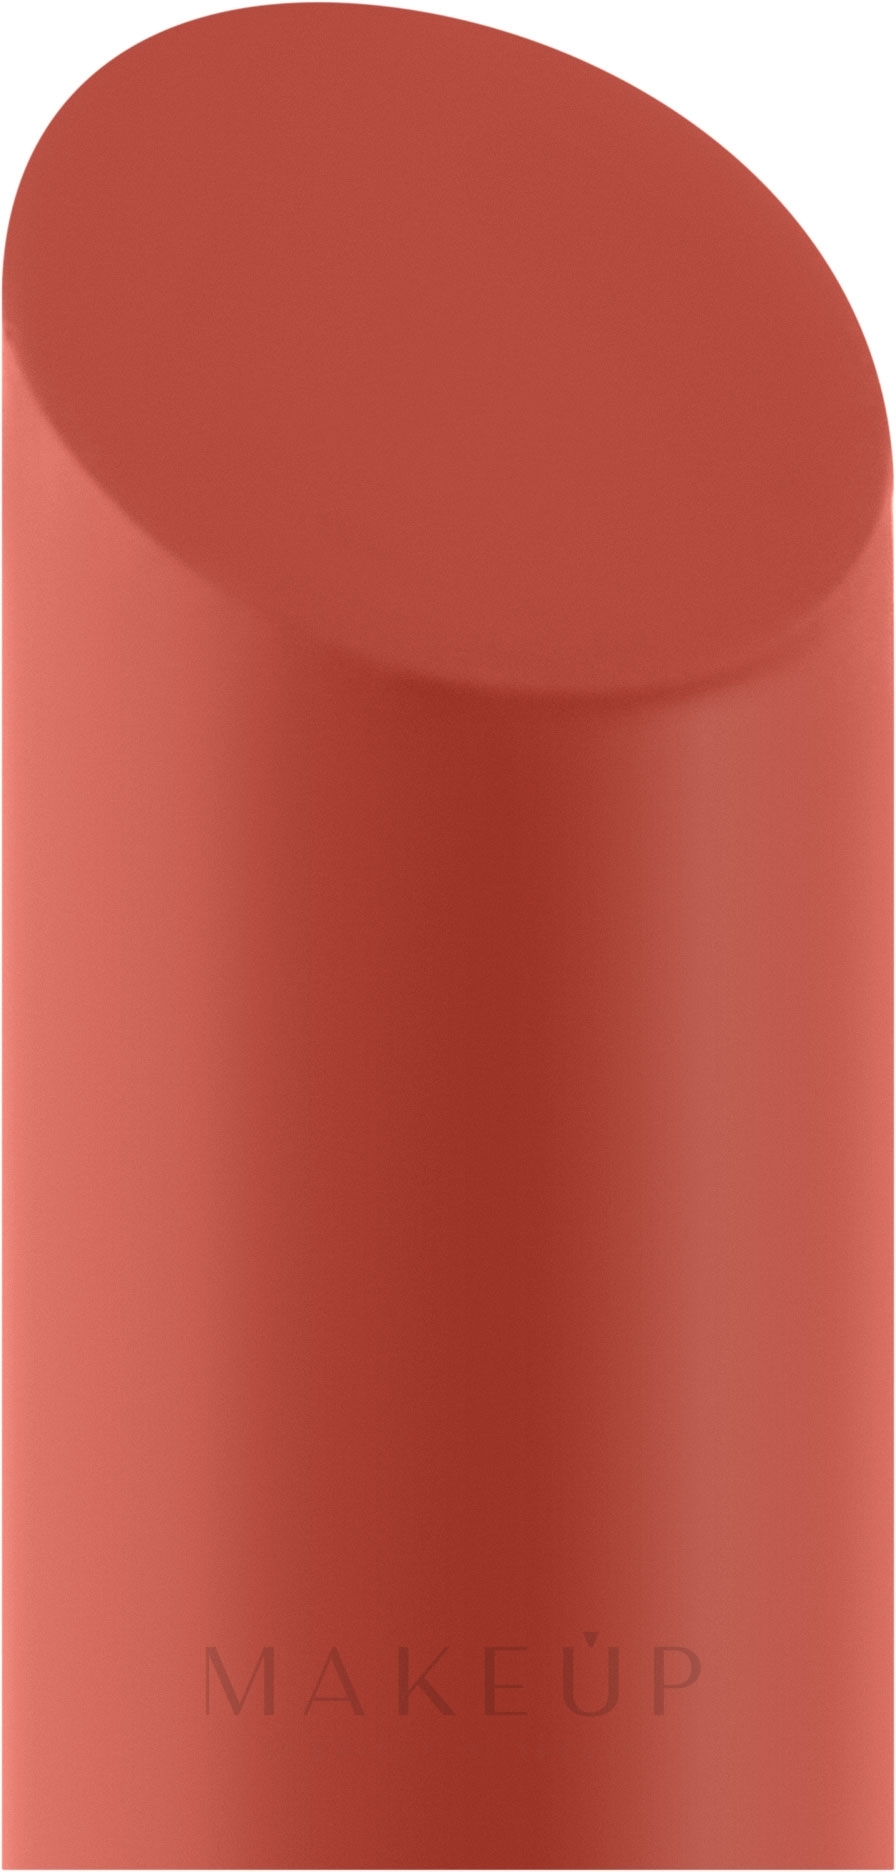 Lippenbalsam - Shiseido ColorGel Lipbalm — Bild 102 - Narcissus (Apricot)